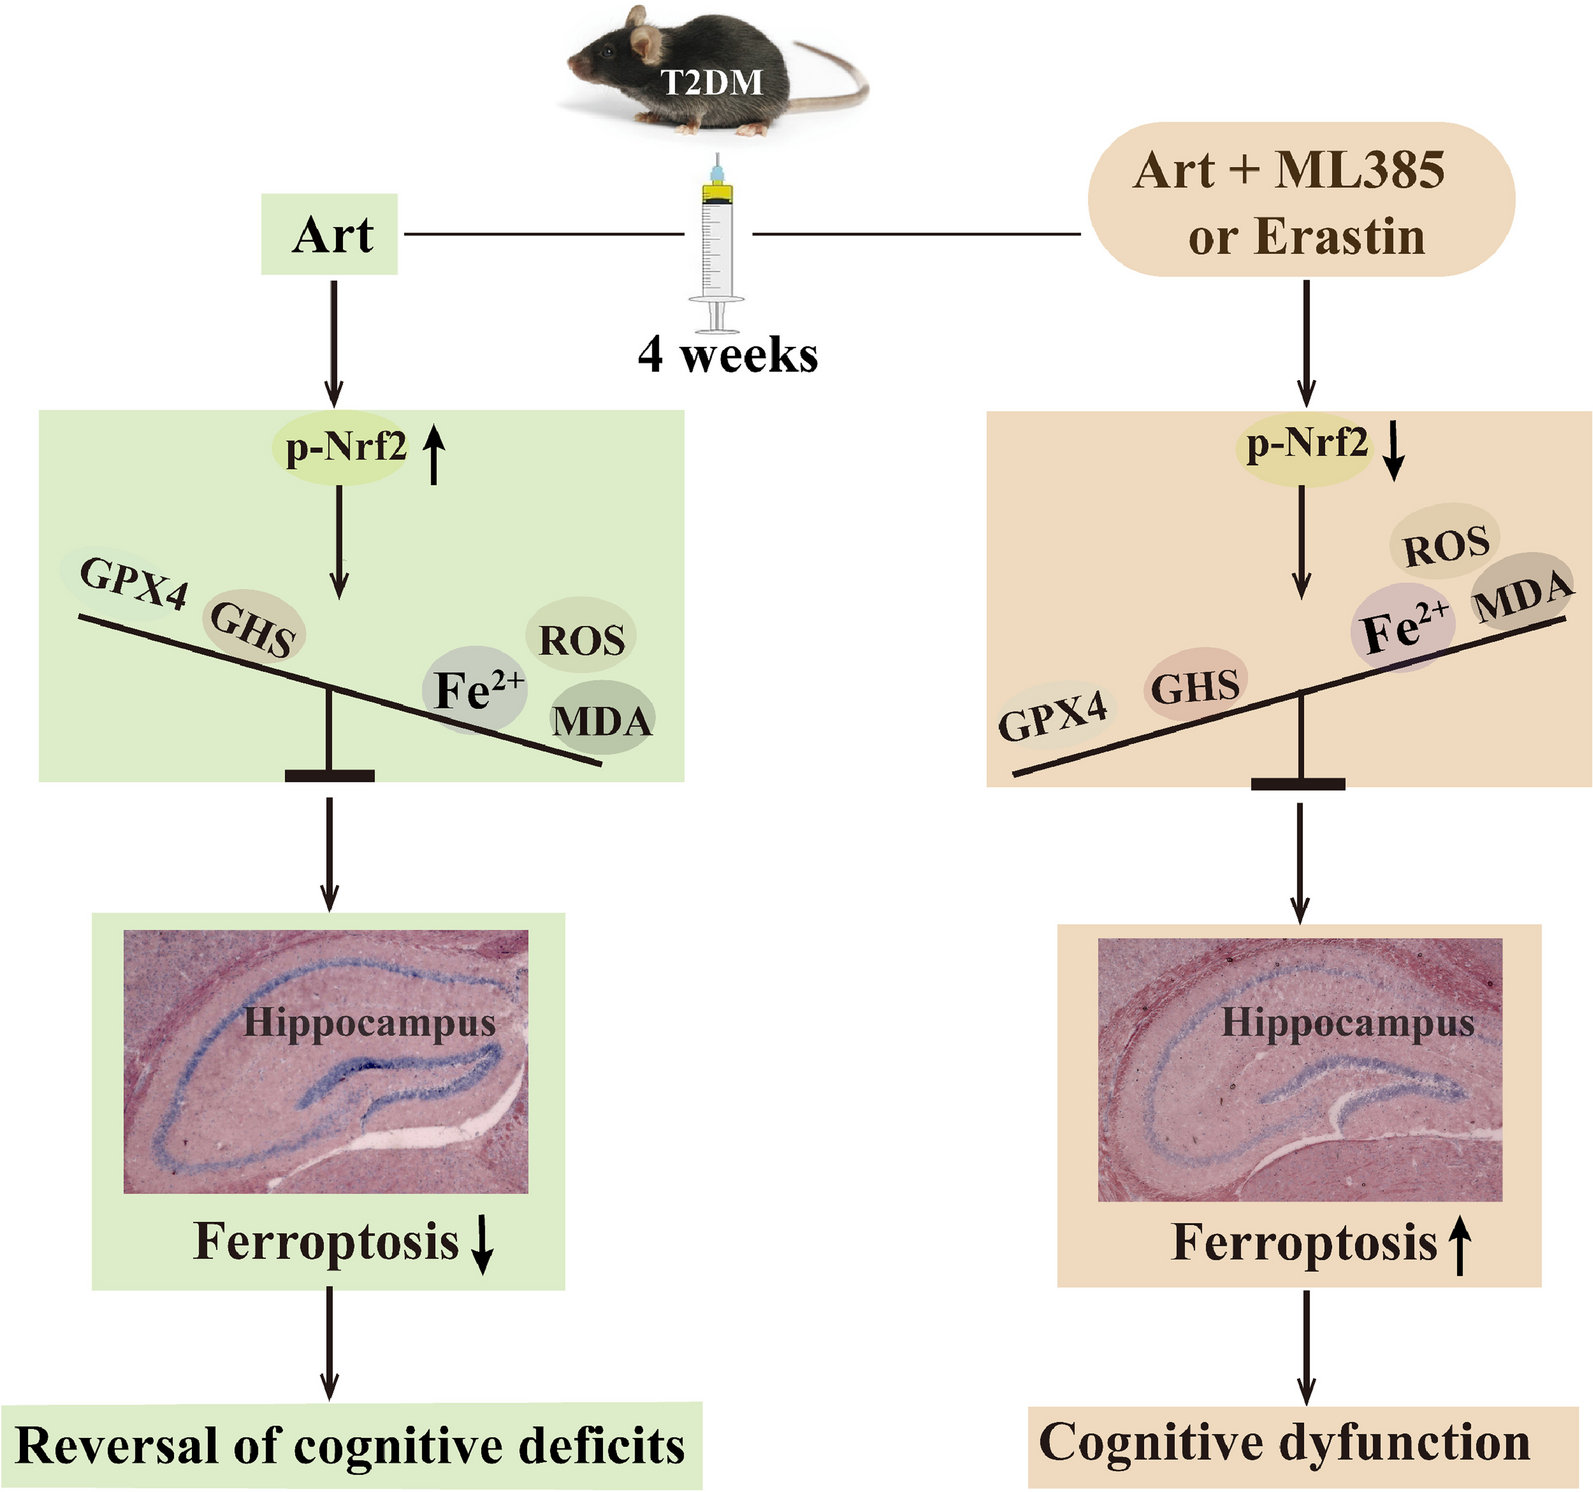 Artemisinin ameliorates cognitive decline by inhibiting hippocampal neuronal ferroptosis via Nrf2 activation in T2DM mice